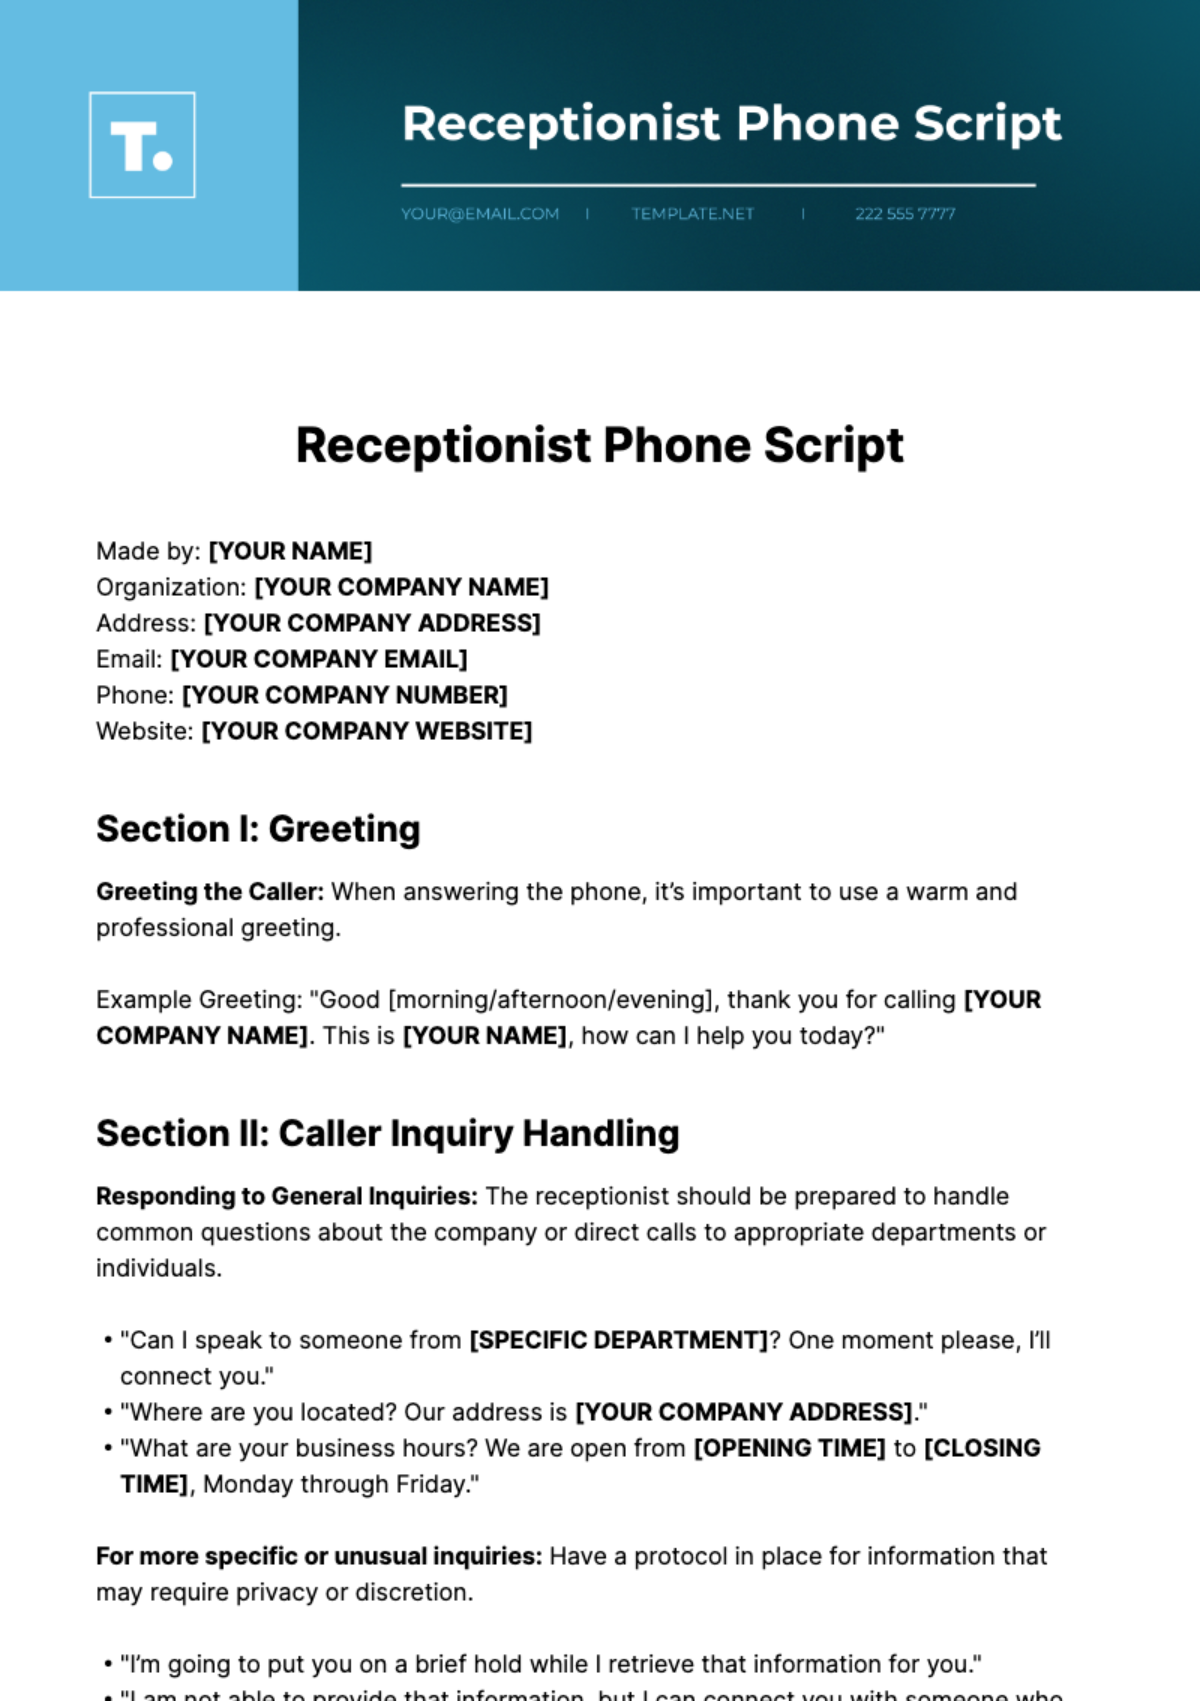 Receptionist Phone Script Template